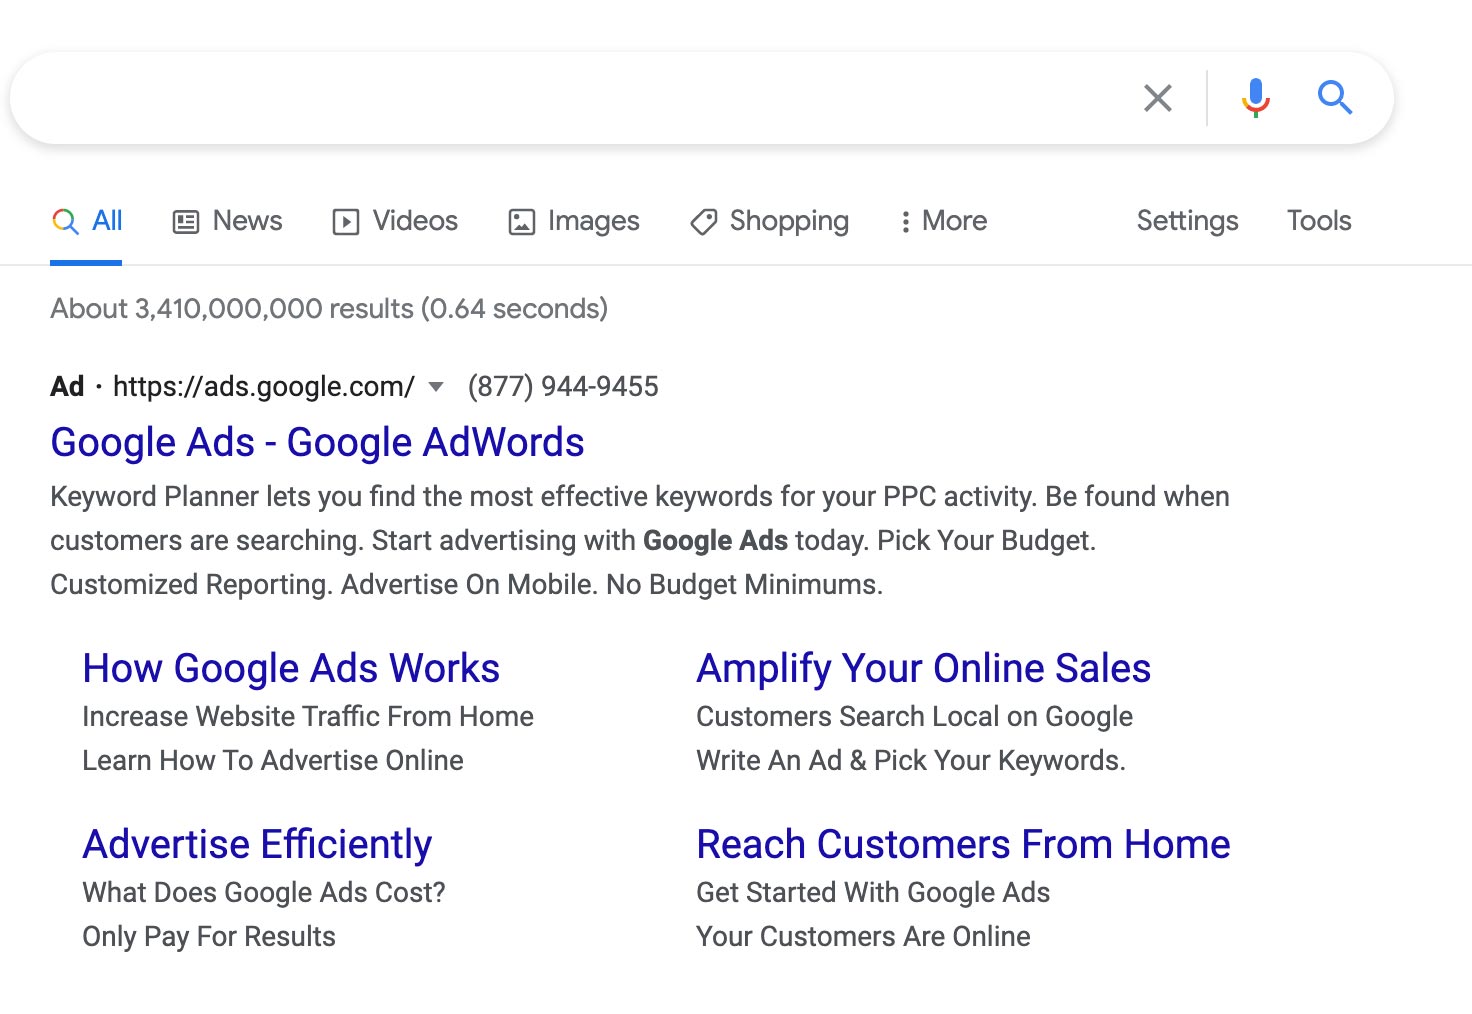 A screenshot showing a Google Ads result